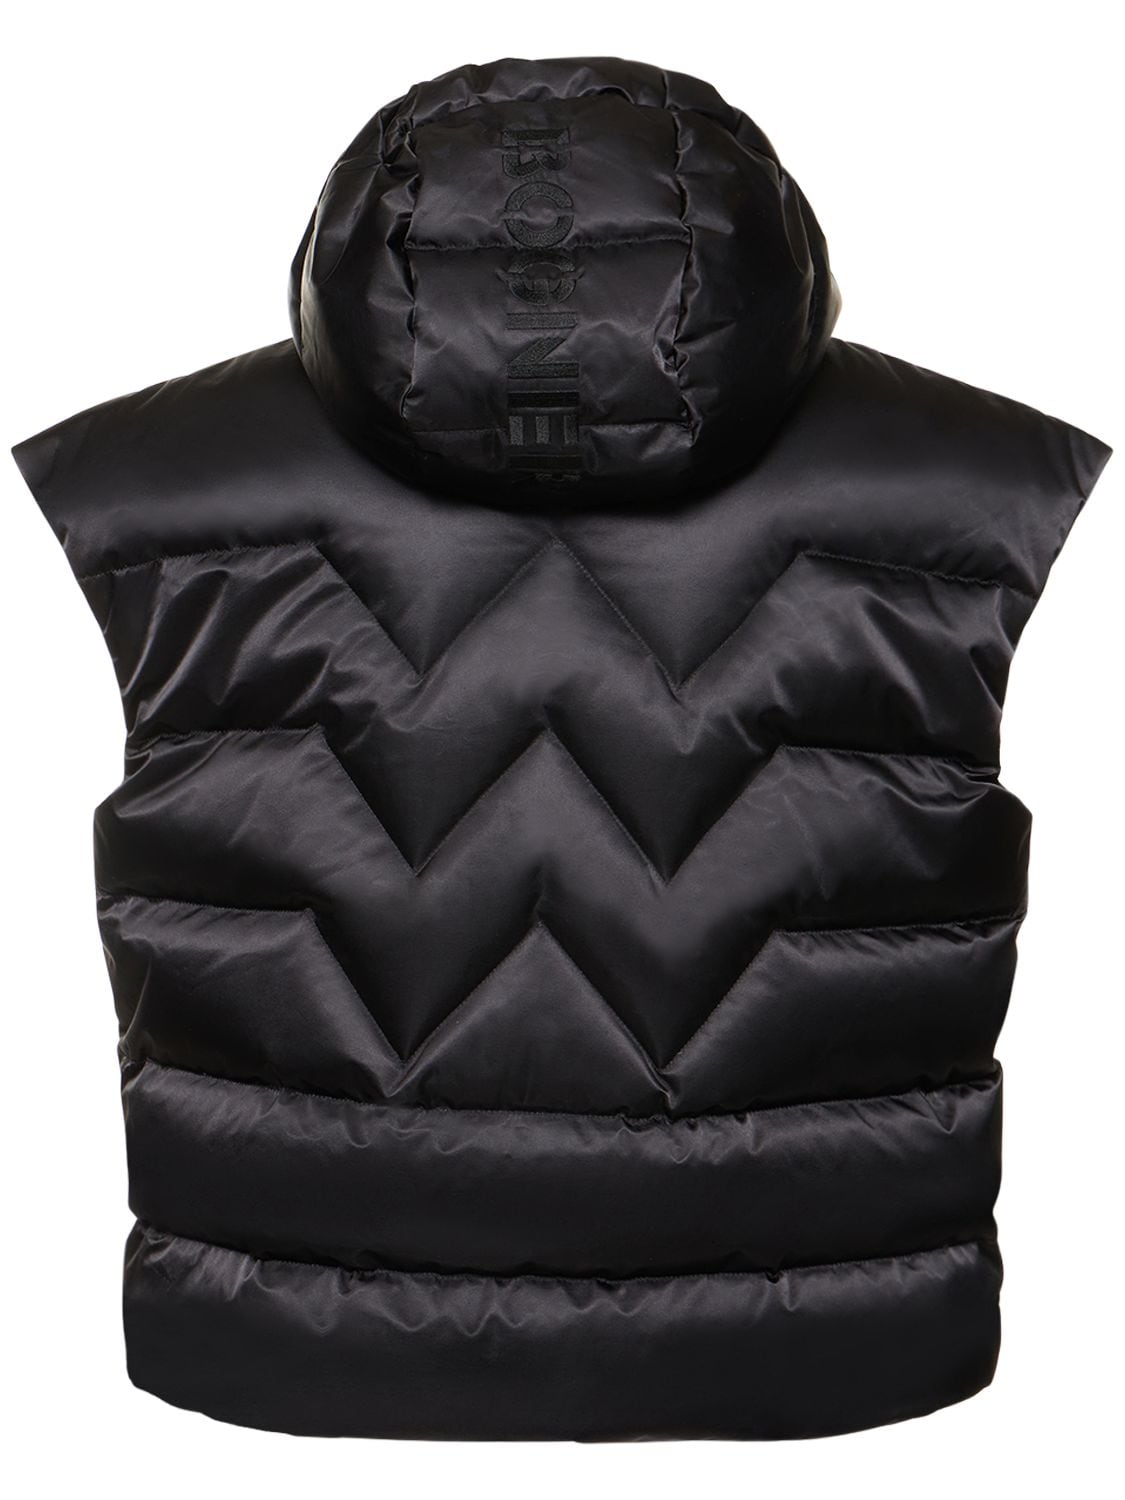 Bogner Logo Leather Nylon Puffy Backpack Black